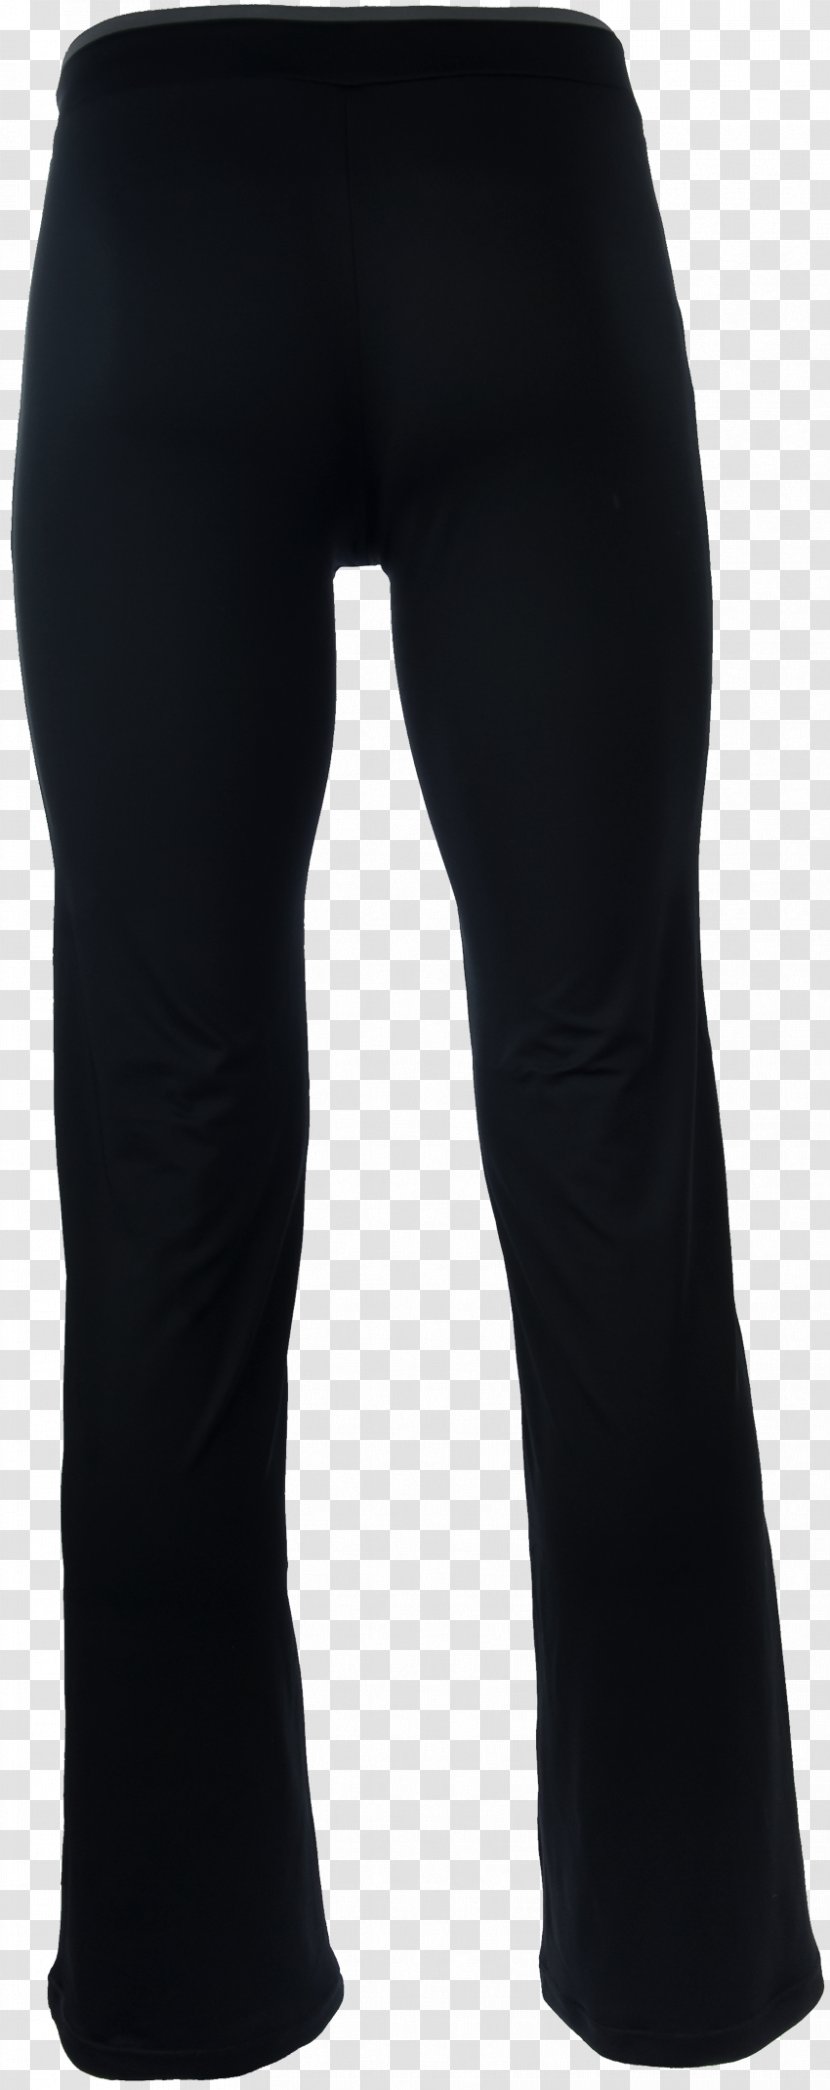 Pants Levi Strauss & Co. Clothing Shorts Zipper Transparent PNG